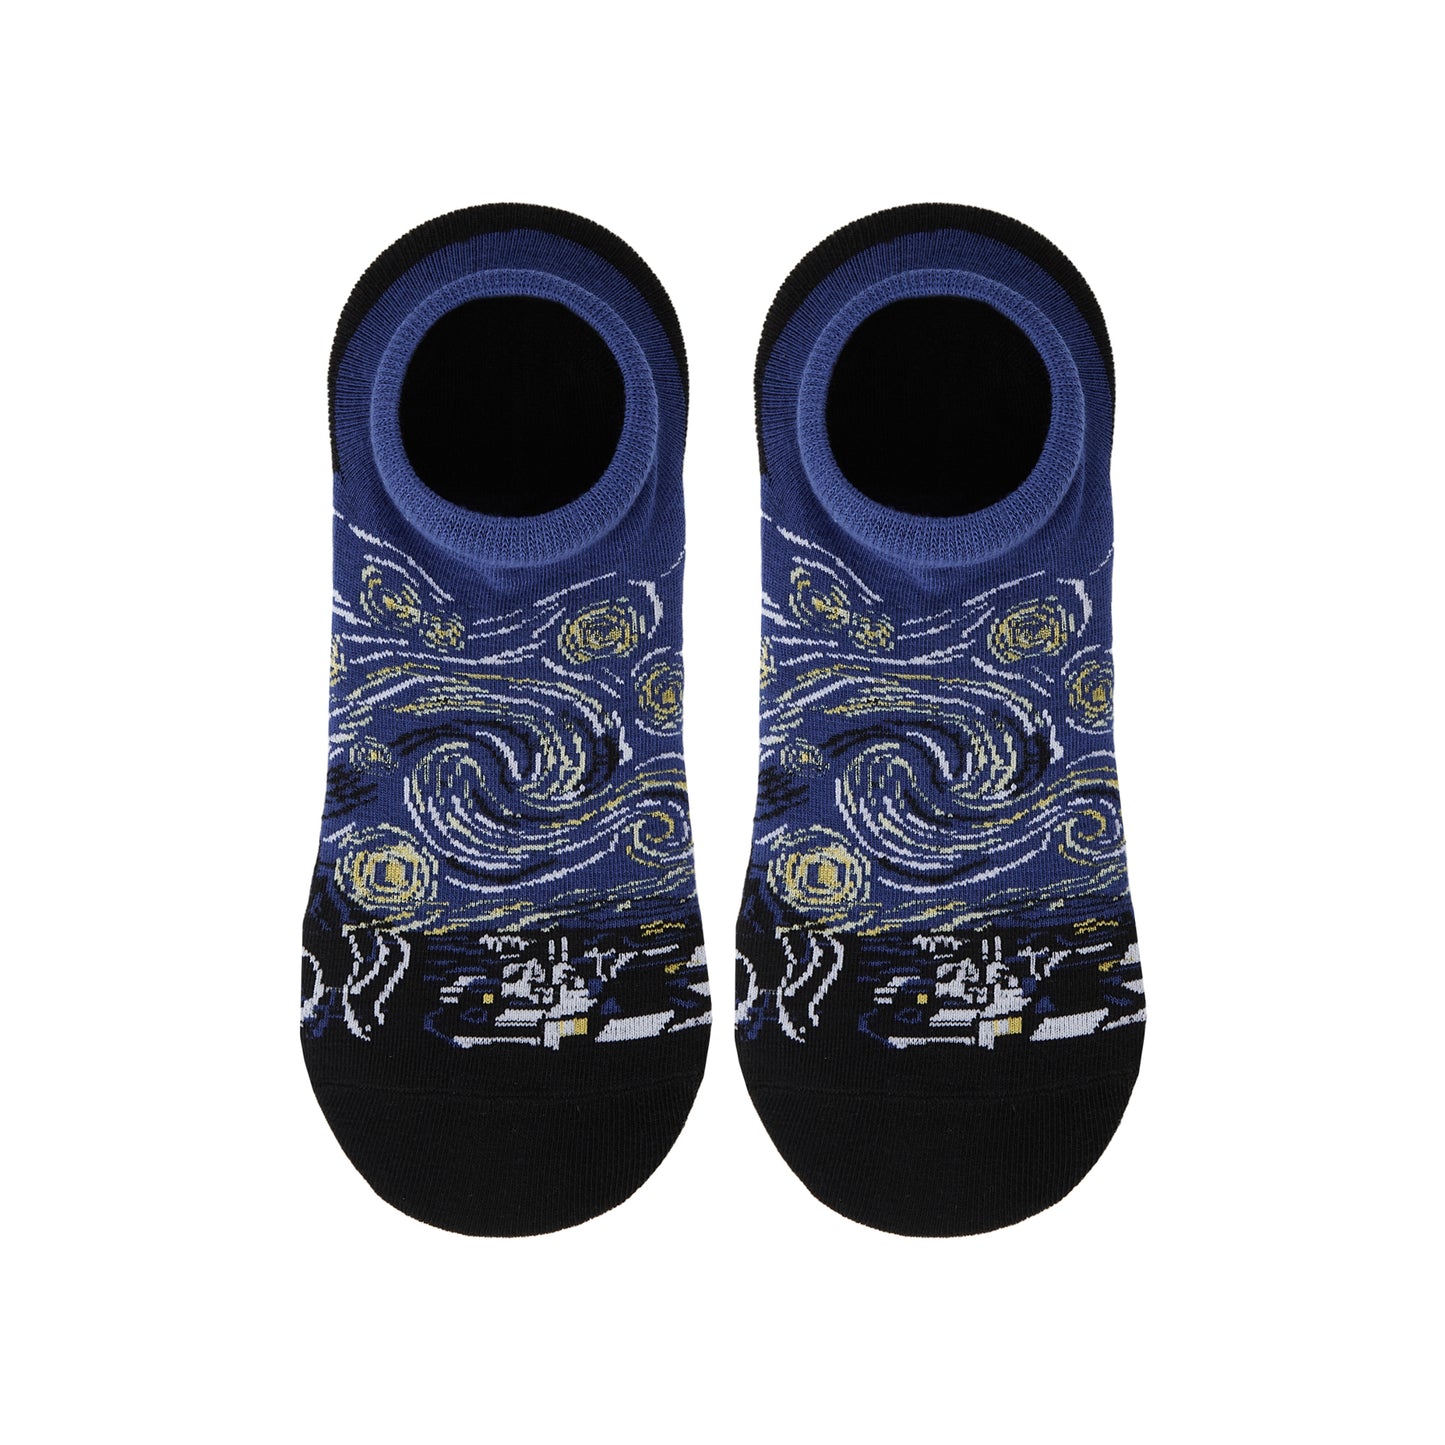 Starry Night Printed Ankle Socks - IDENTITY Apparel Shop